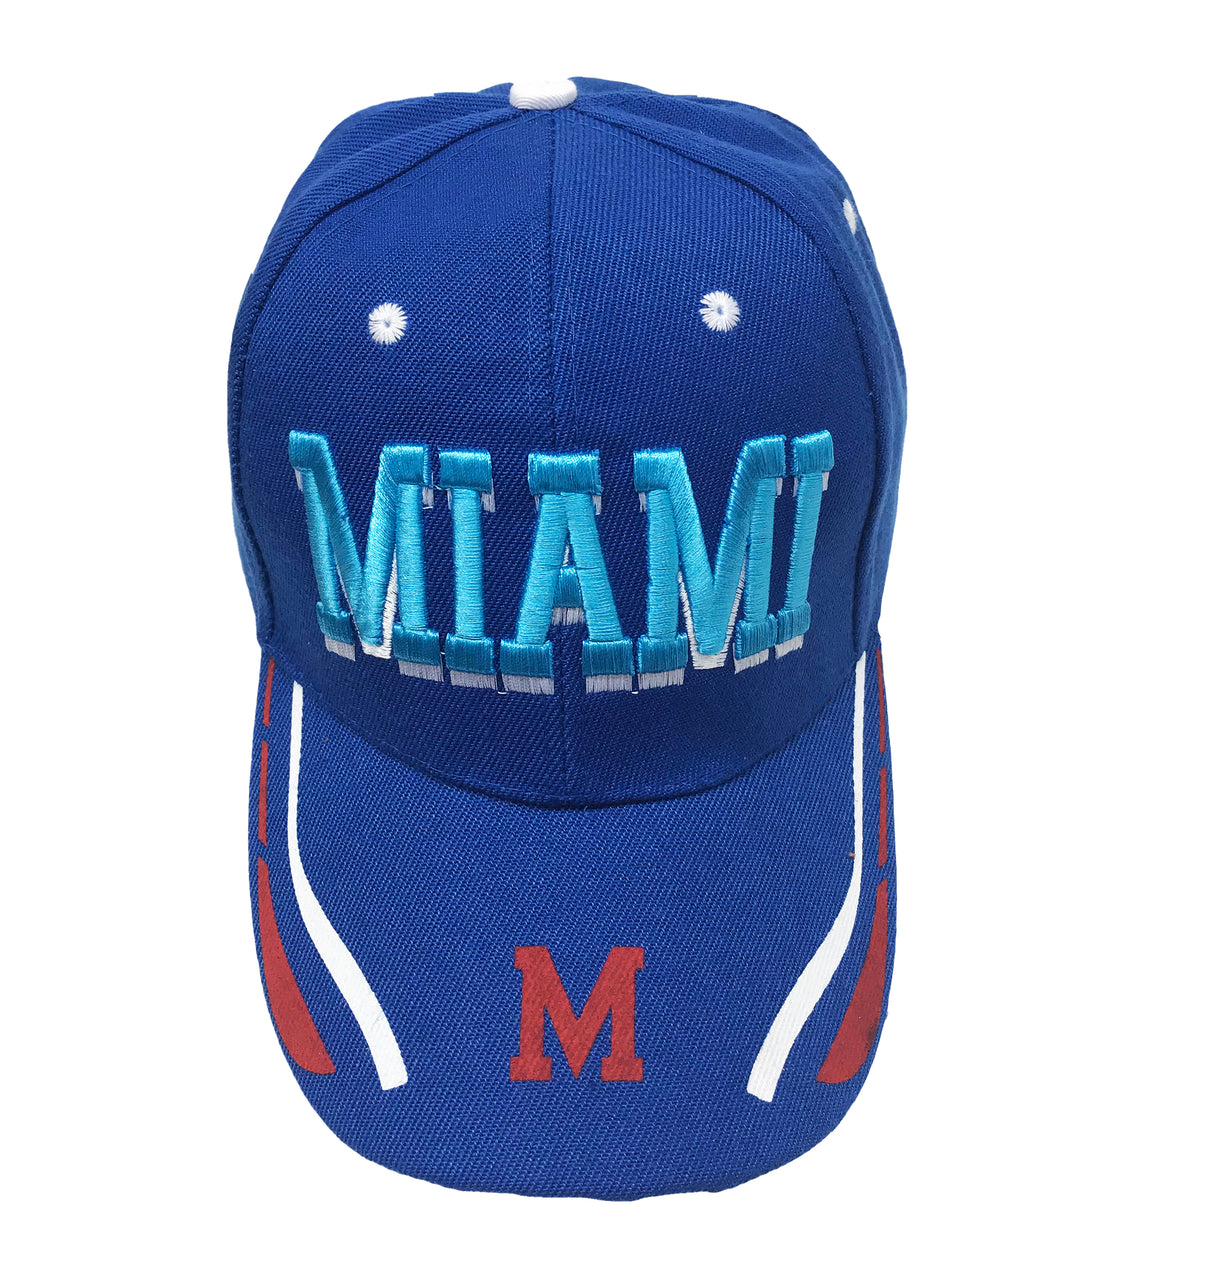 Gorra Diseño de Miami